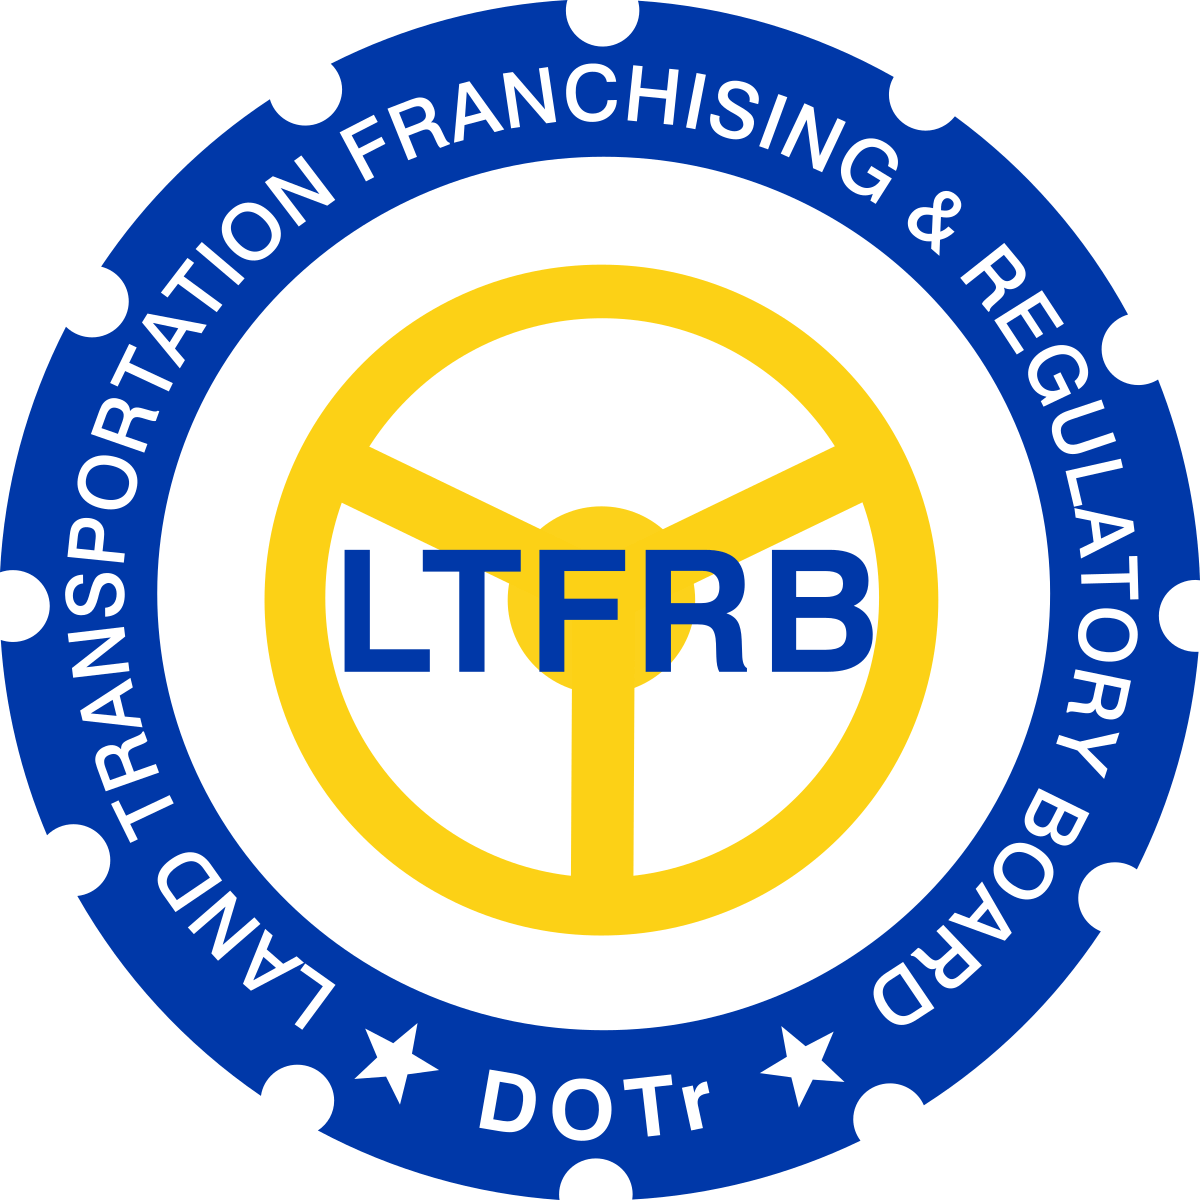 ltfrb logo philippines